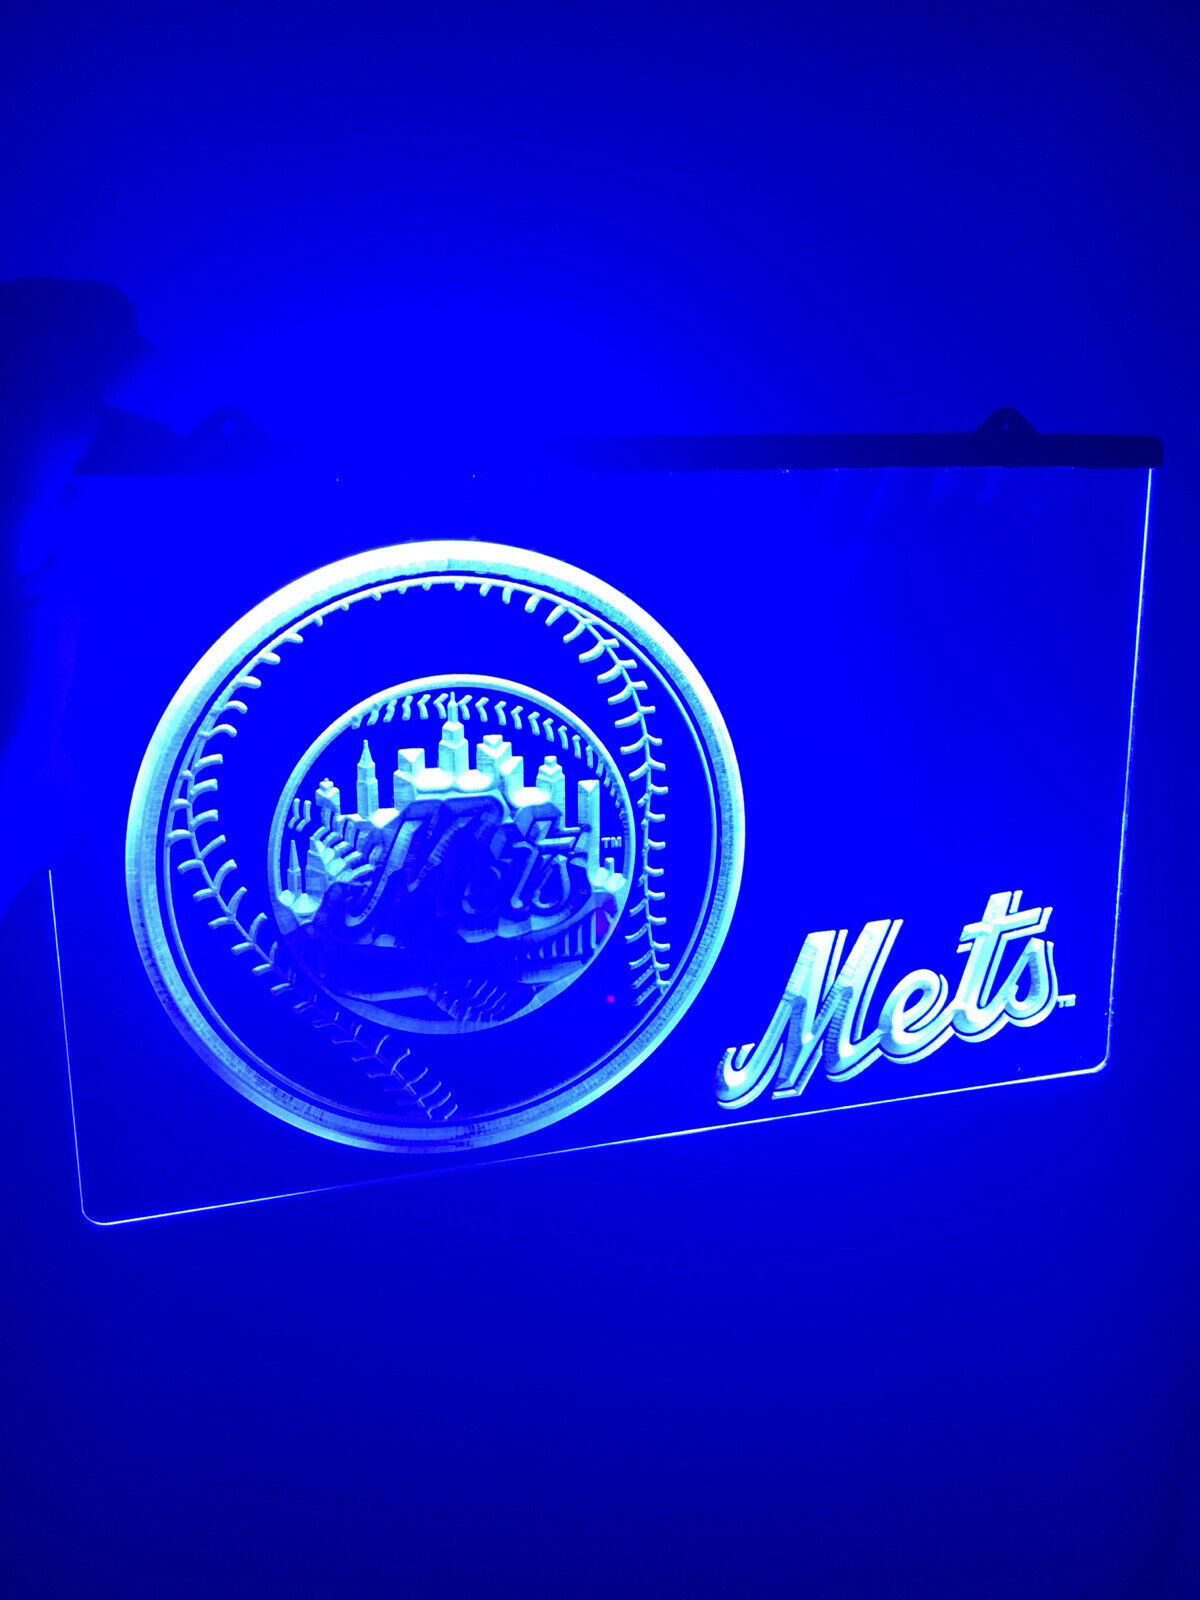 MLB NEW YORK METS LOGO LED Light Sign for Game Room,Office,Bar,Man Cave.